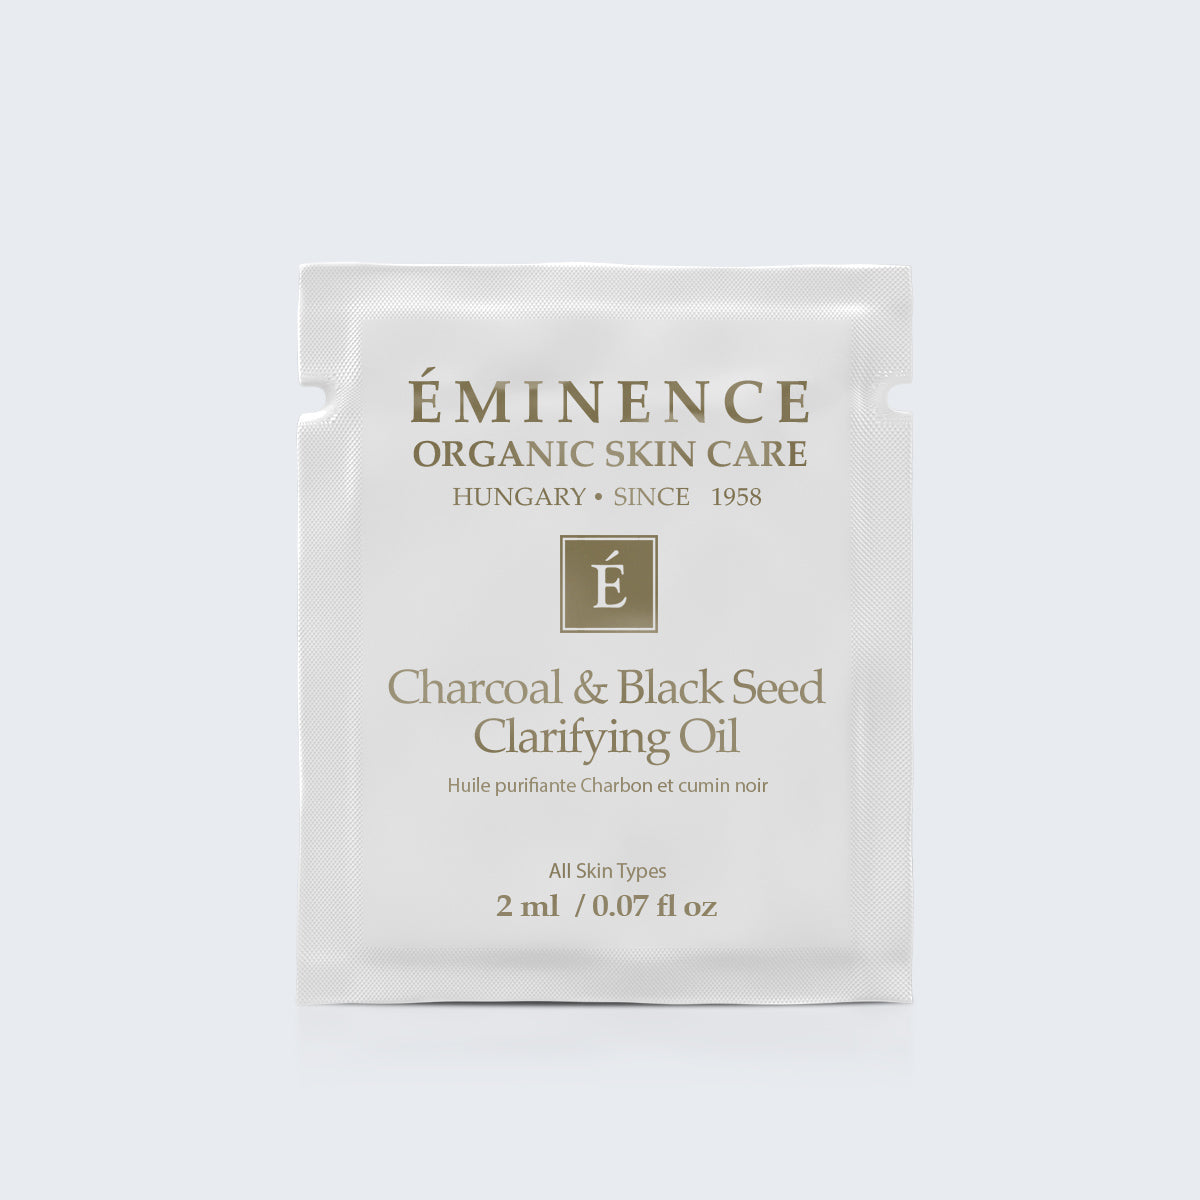 Eminence Organics Charcoal & Black Seed Clarifying Oil Sample